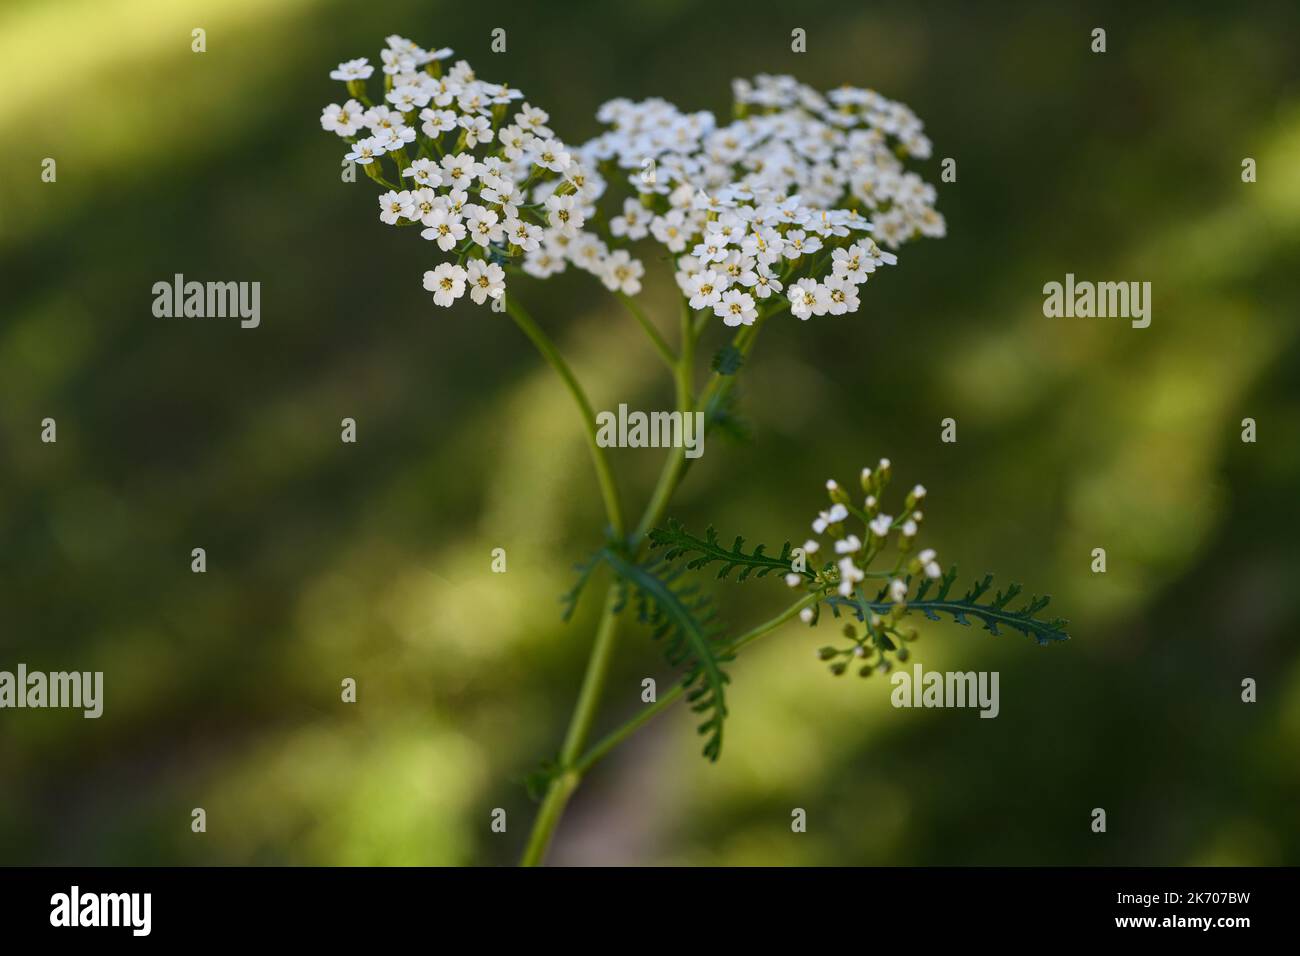 White yarrow flowers on blurred  background Stock Photo